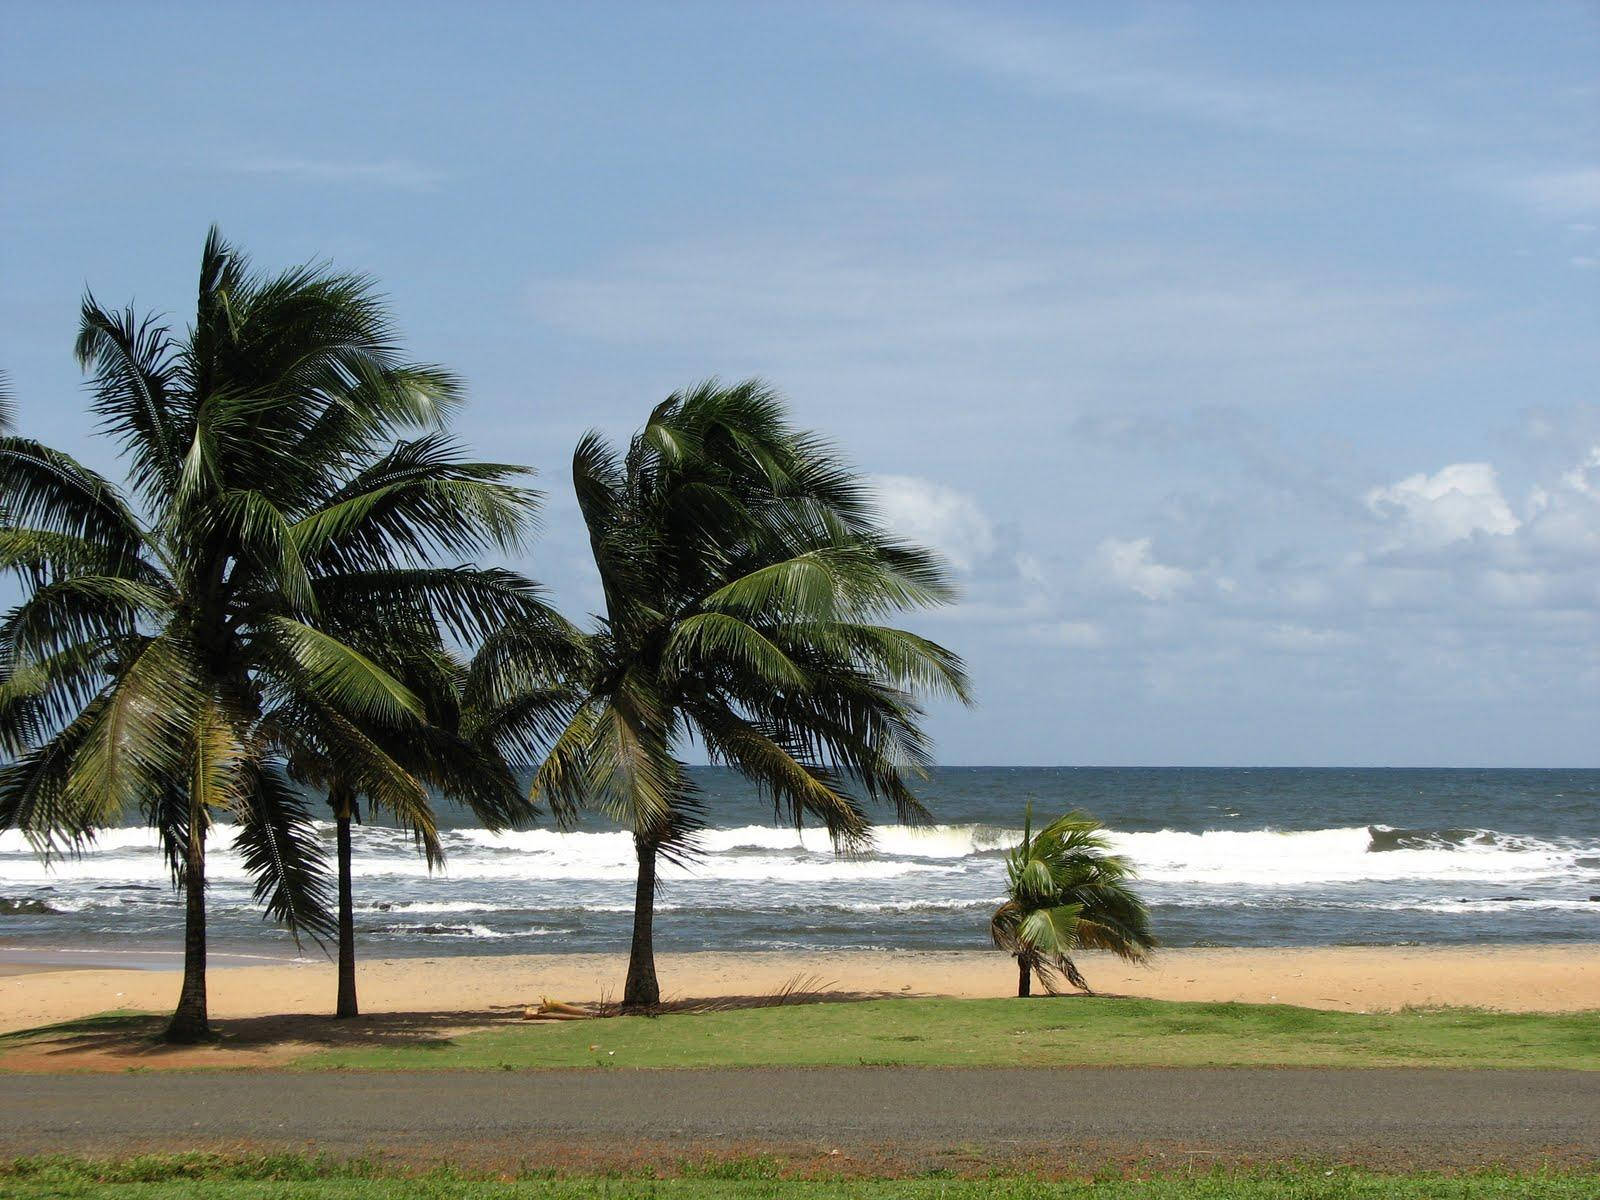 Liberia Palm Beach Background